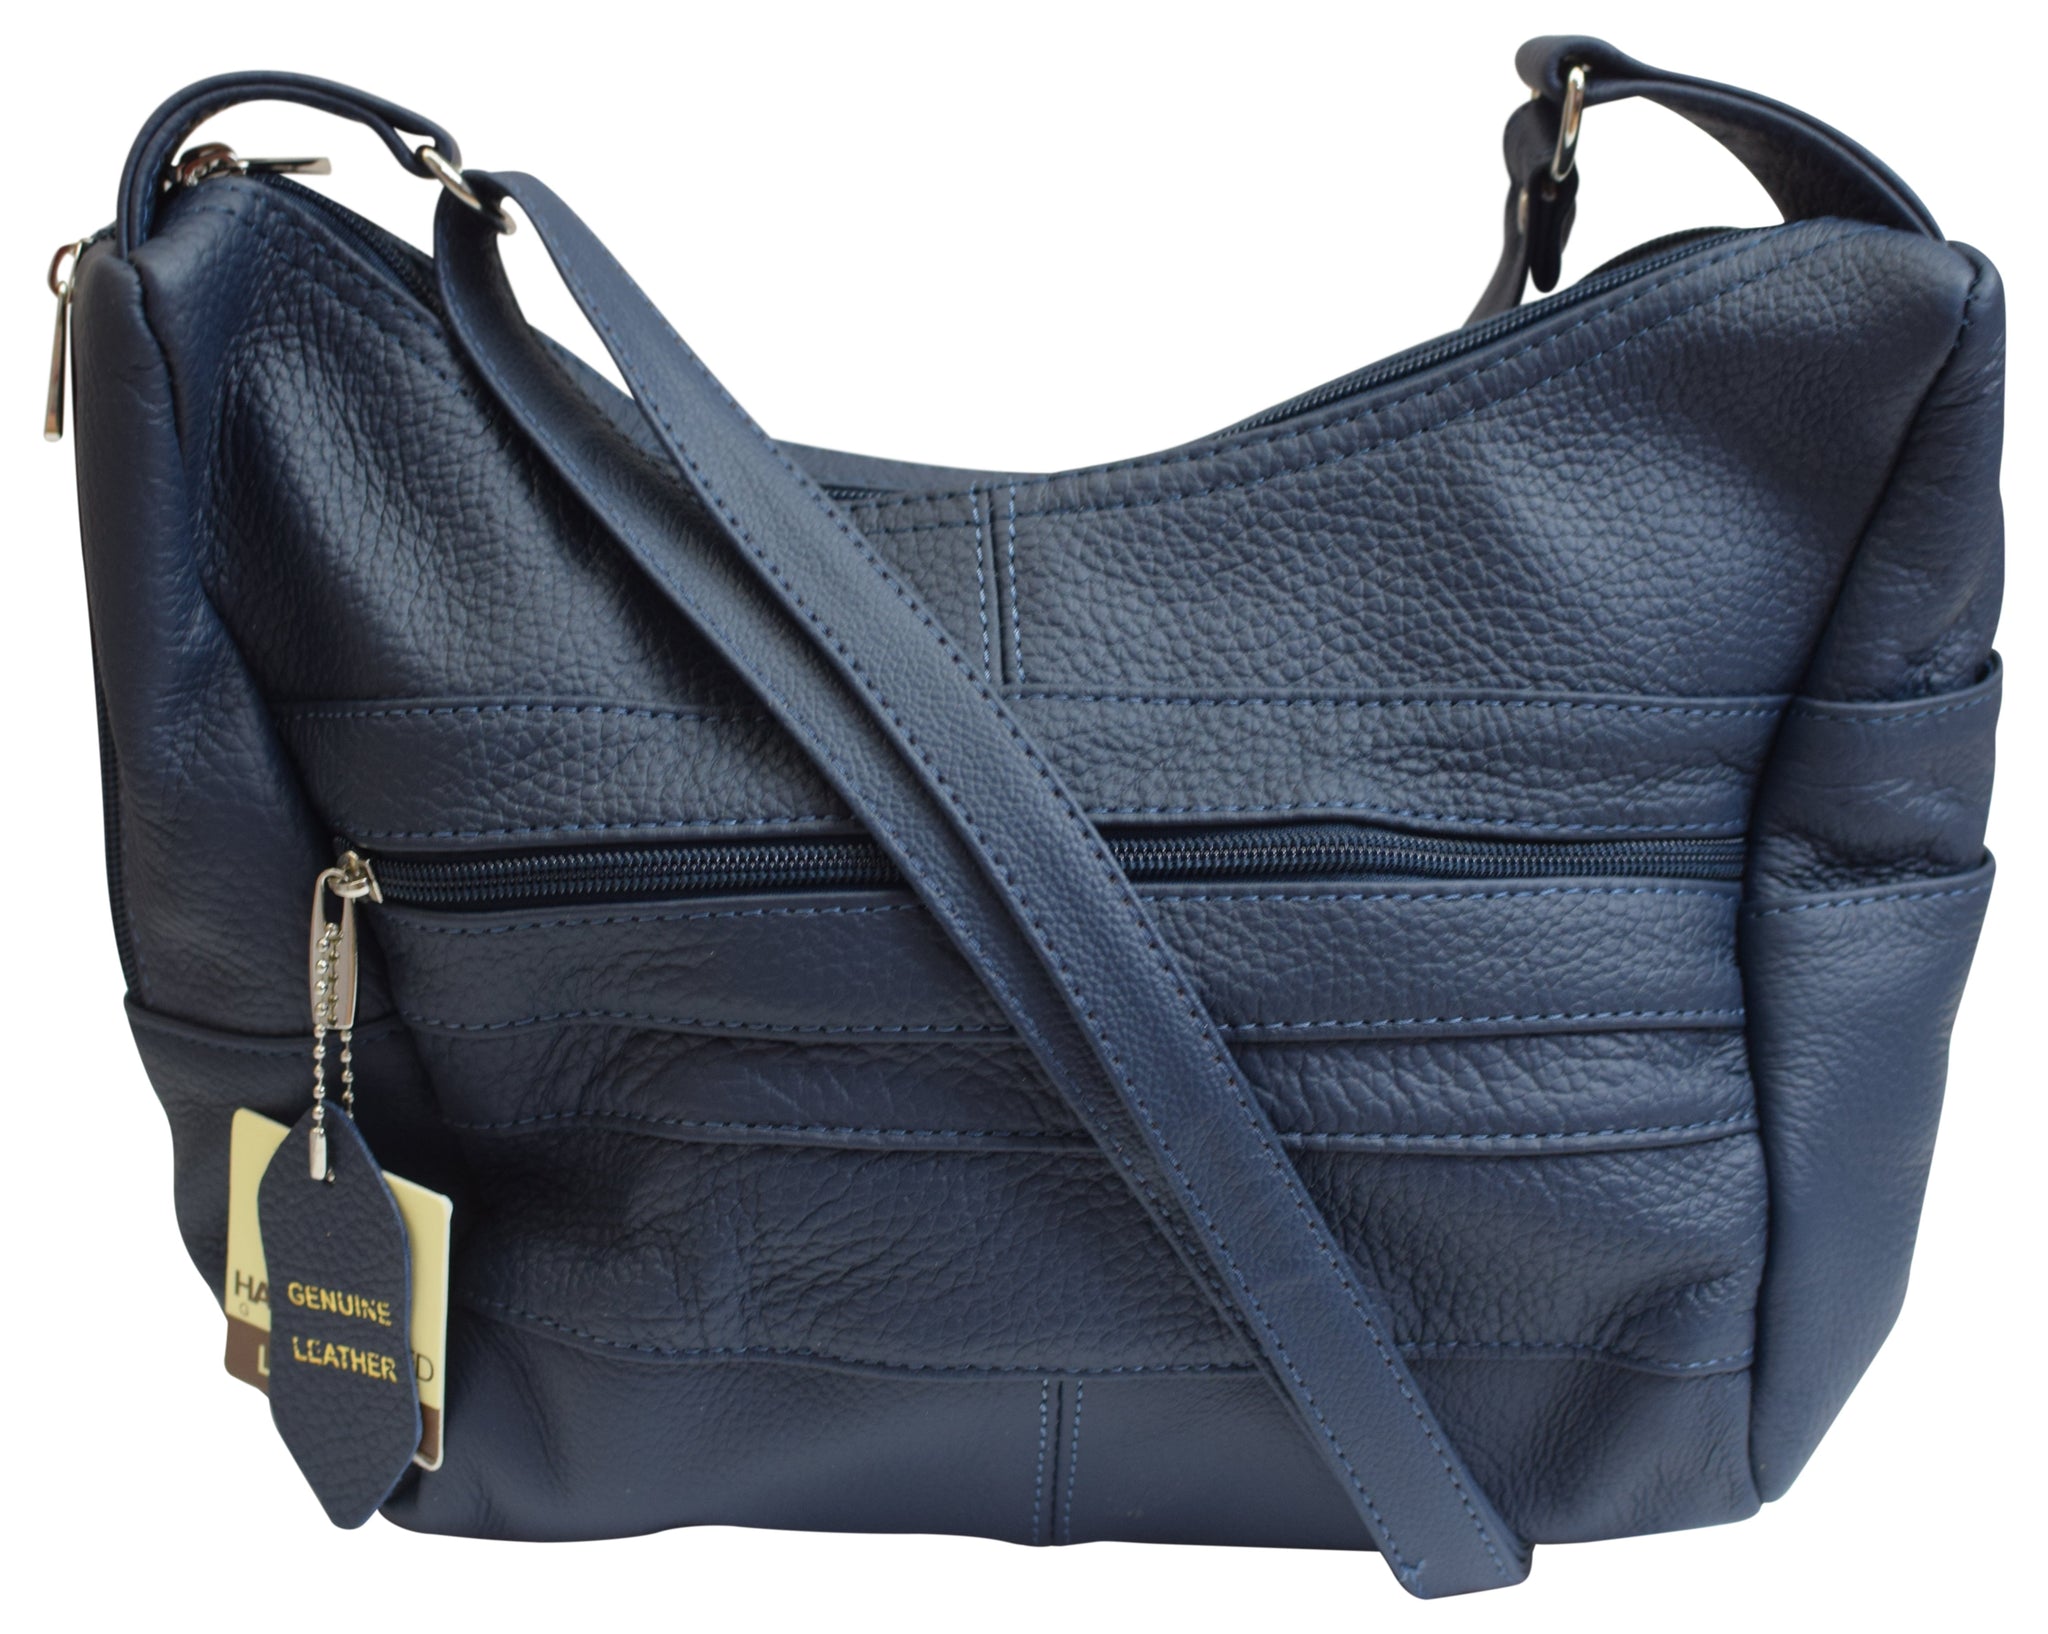 Buy HEMOVIA Women Top Handle Satchel Handbags Shoulder Bag Messenger Tote  Bag Purse (Purse, Brown) (Angle, Animal) at Amazon.in